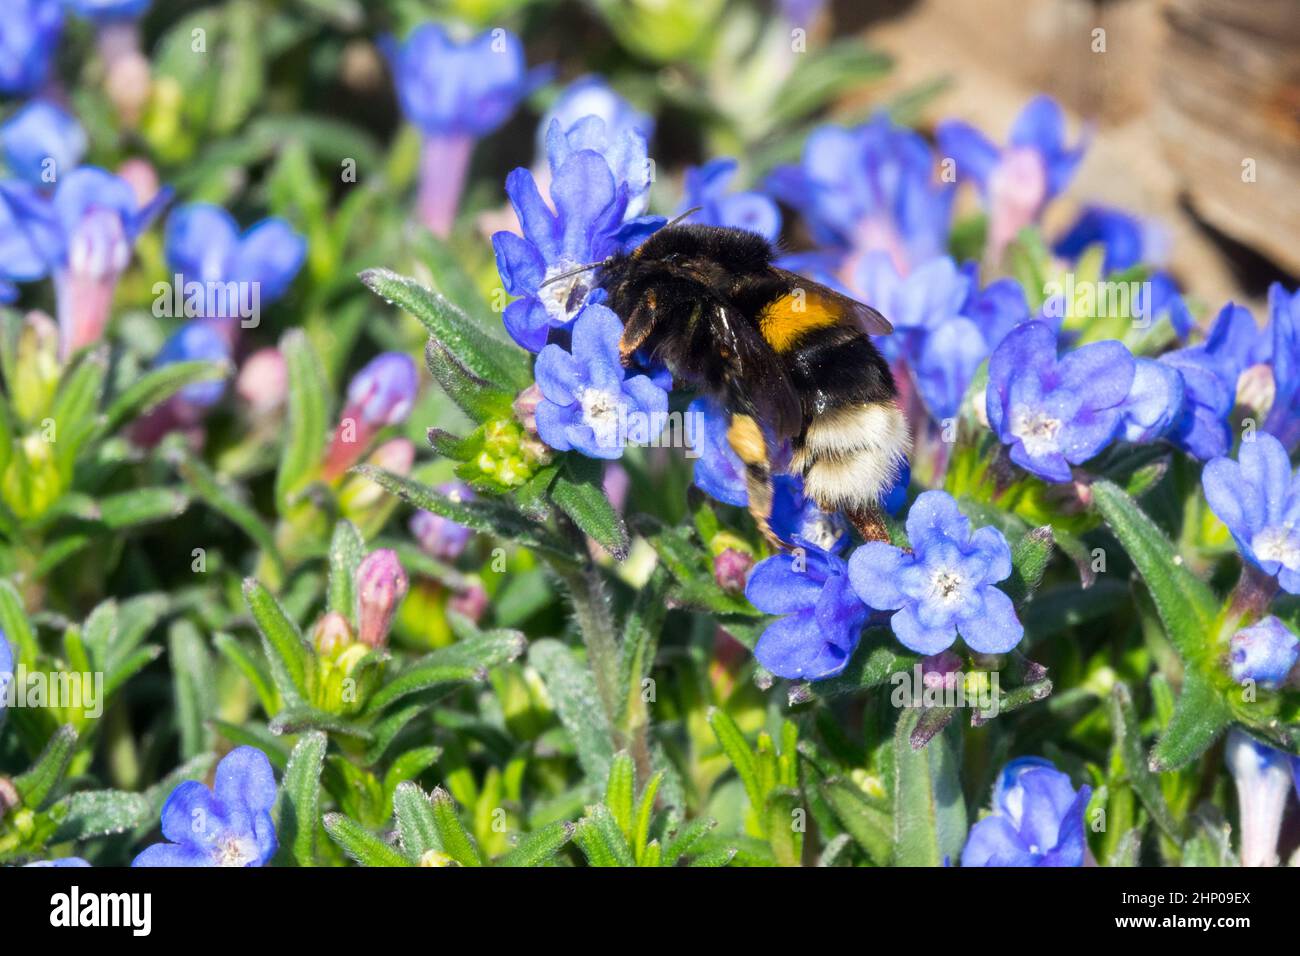 Bombus terrestris, Buff-tailed bumblebee, Bumble bee on flower Lithodora diffusa 'Heavenly Blue' Stock Photo